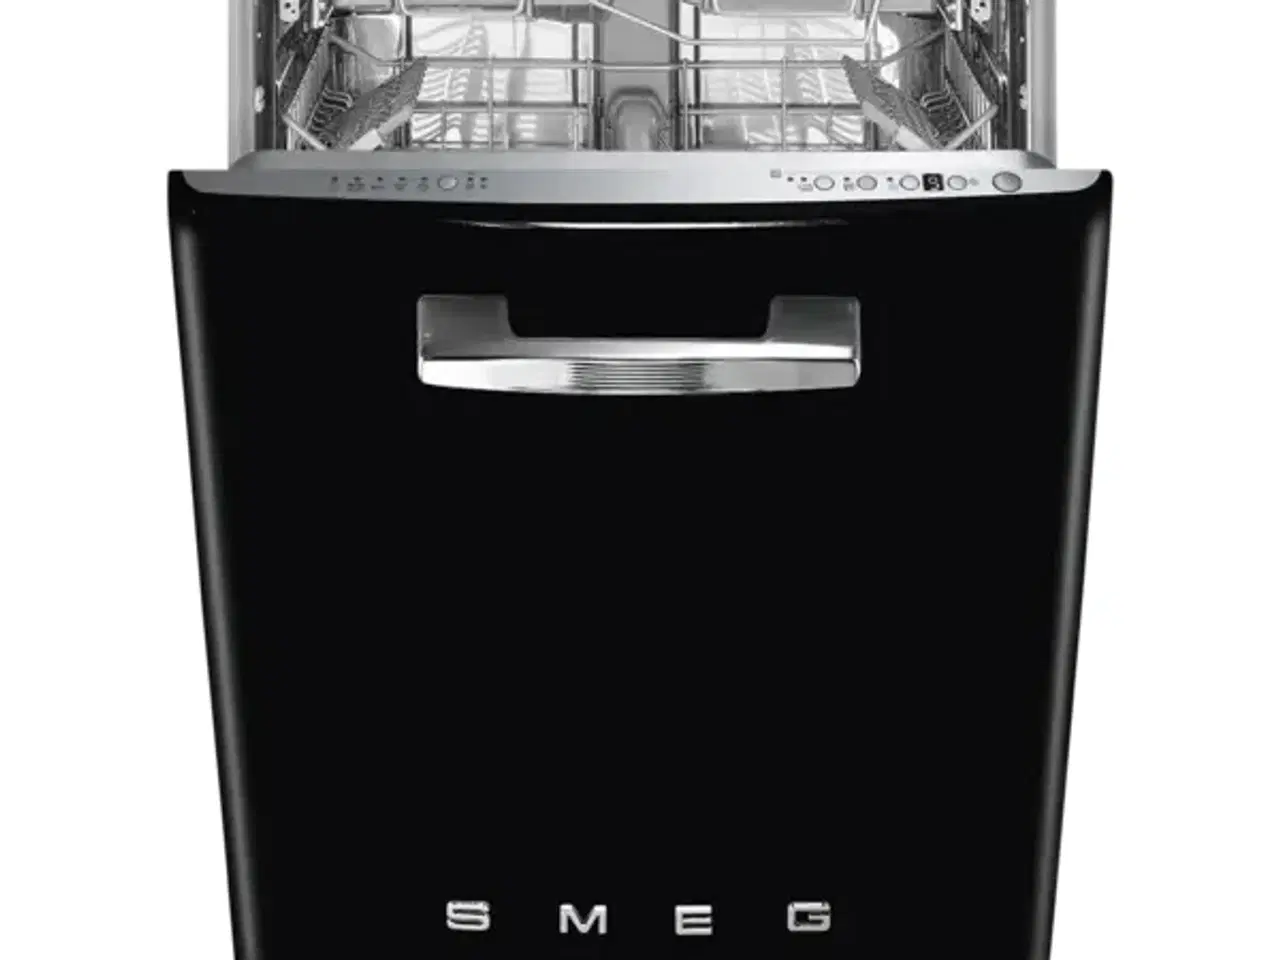 Billede 2 - smeg kølefryseskab sort og smeg opvaskmaskine sort